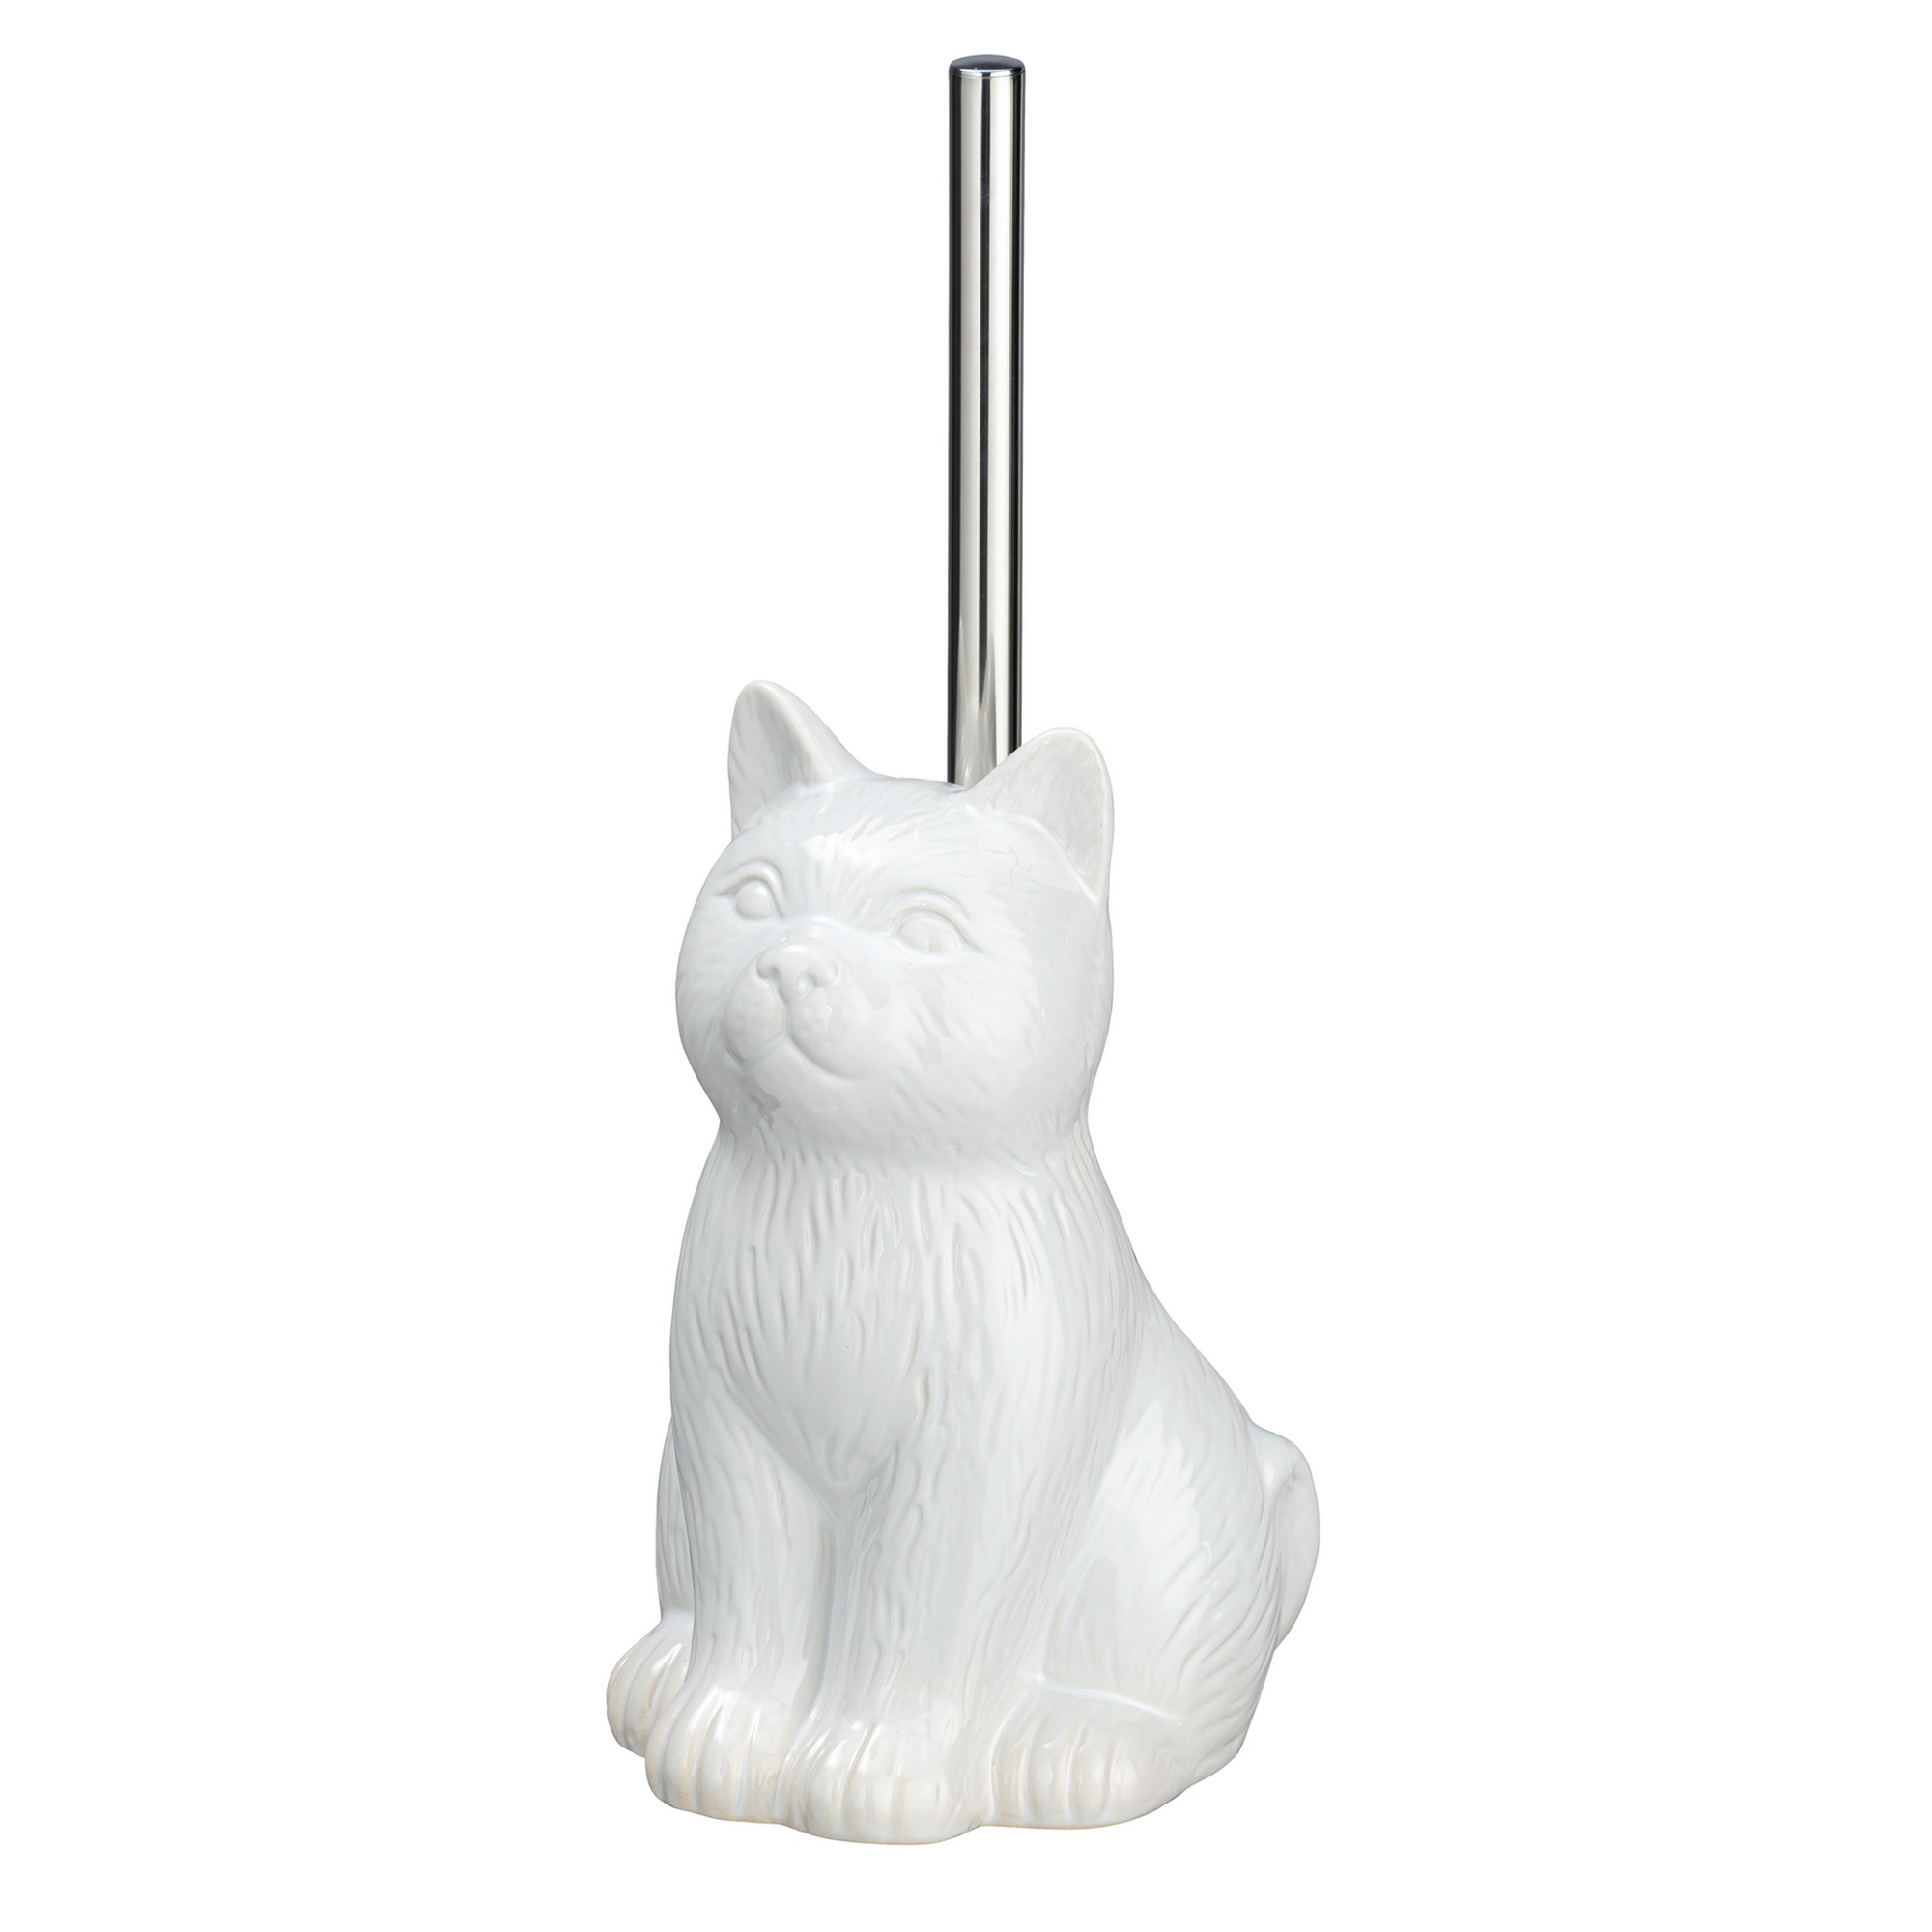 WC-Garnitur 'Cat' weiß Keramik 14 x 22 x 17 cm + product picture